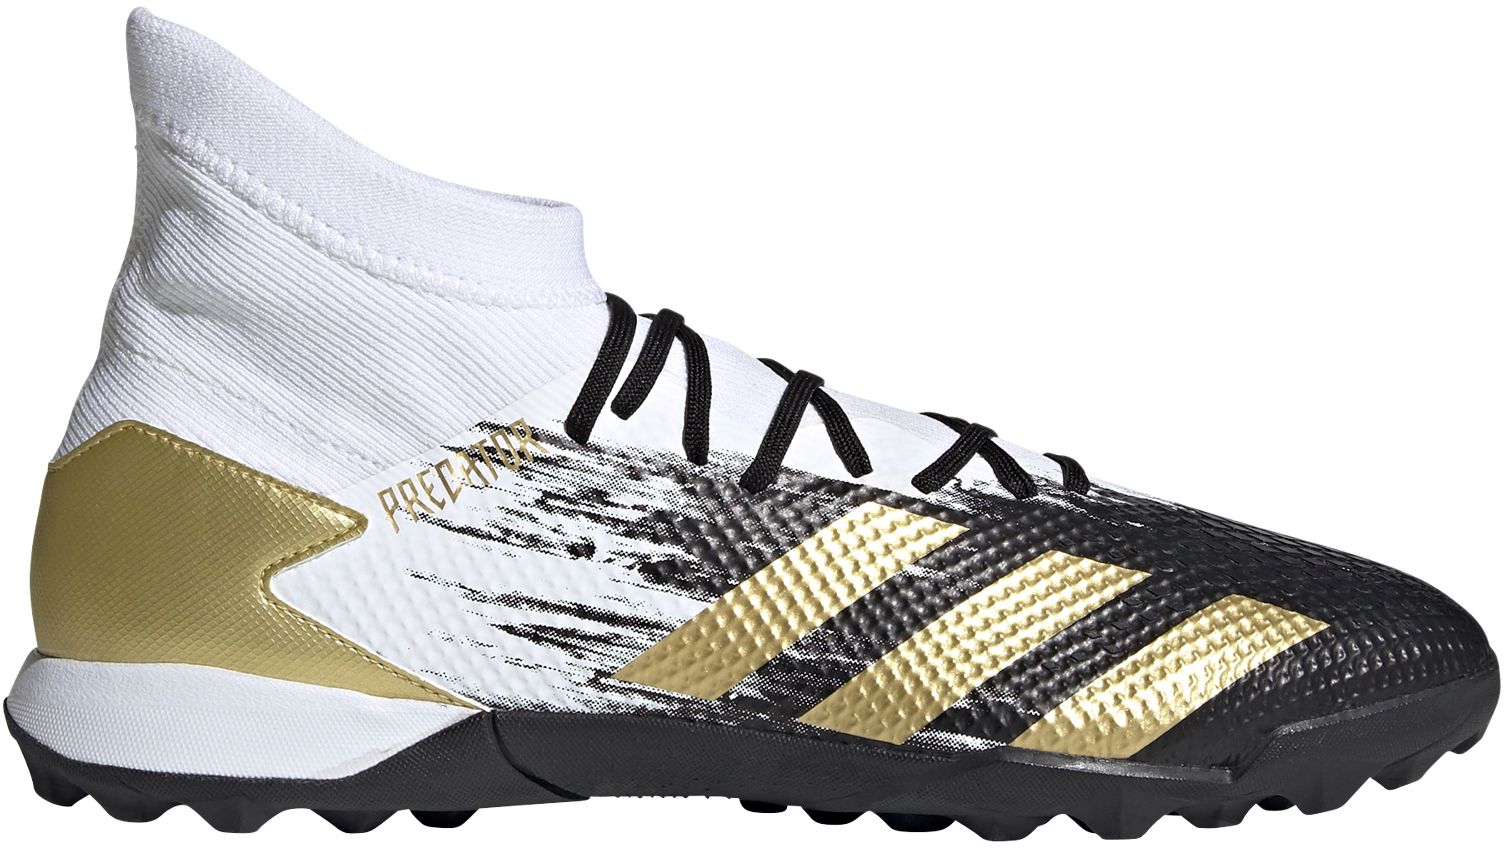 predator soccer turf shoes